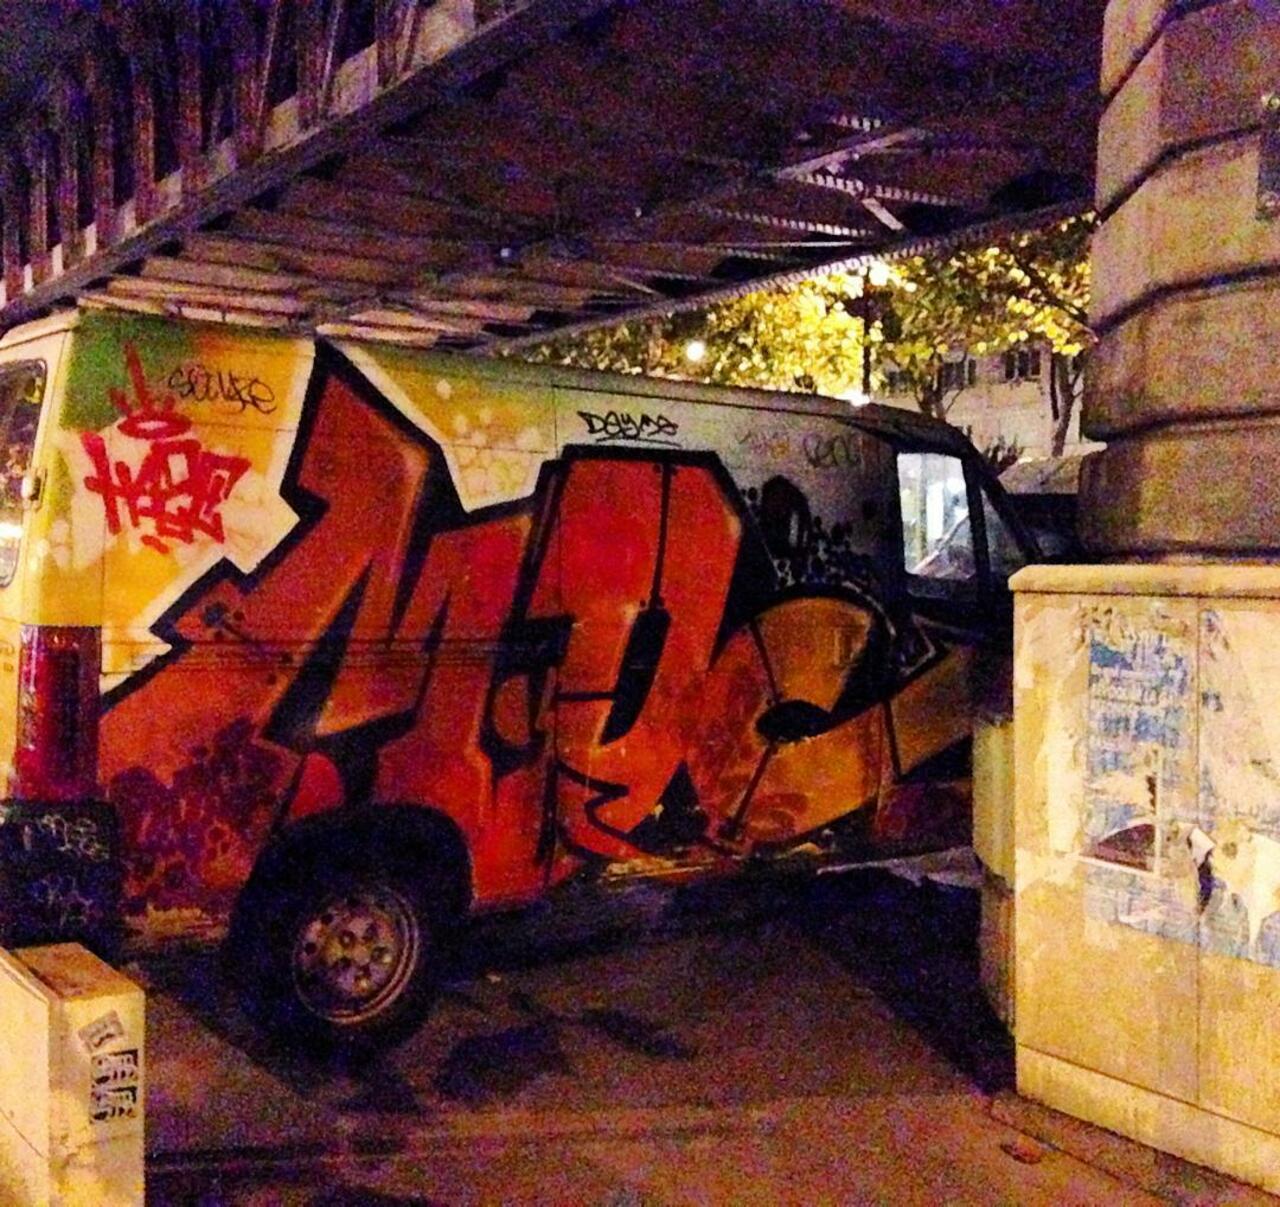 #Paris #graffiti photo by @suprem_sam http://ift.tt/1kJ3q97 #StreetArt https://t.co/a9MSPE0HuK